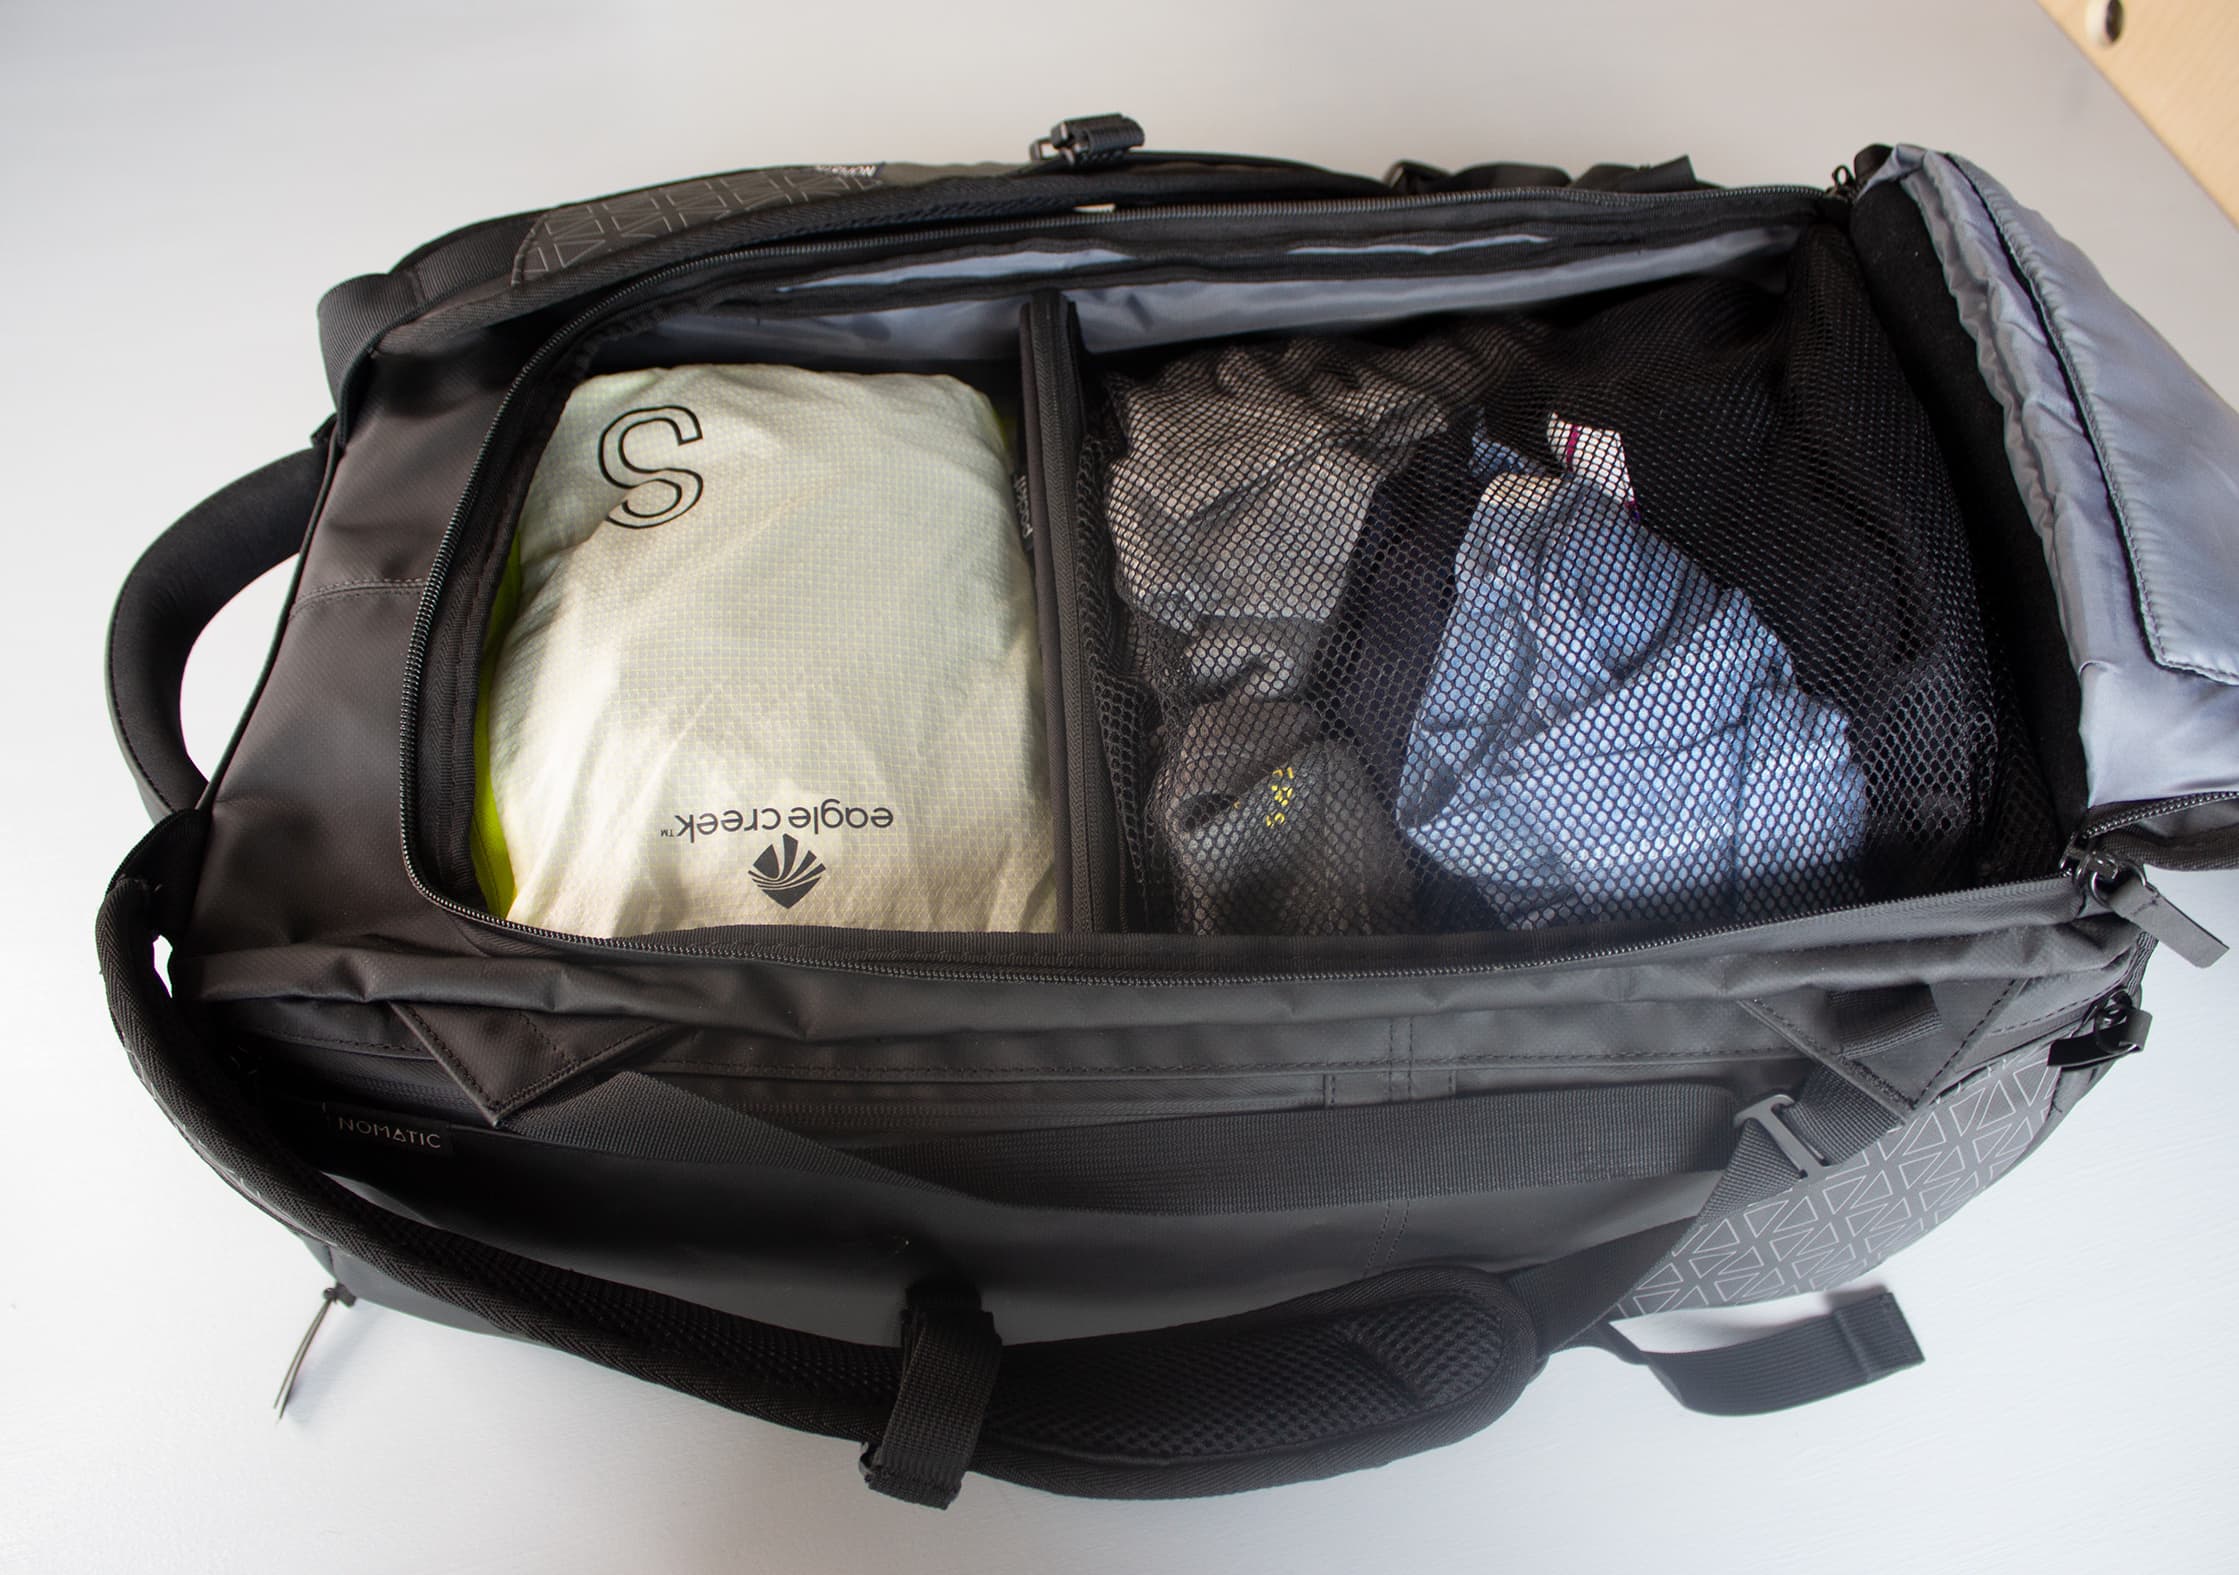 NOMATIC Travel Bag Packed